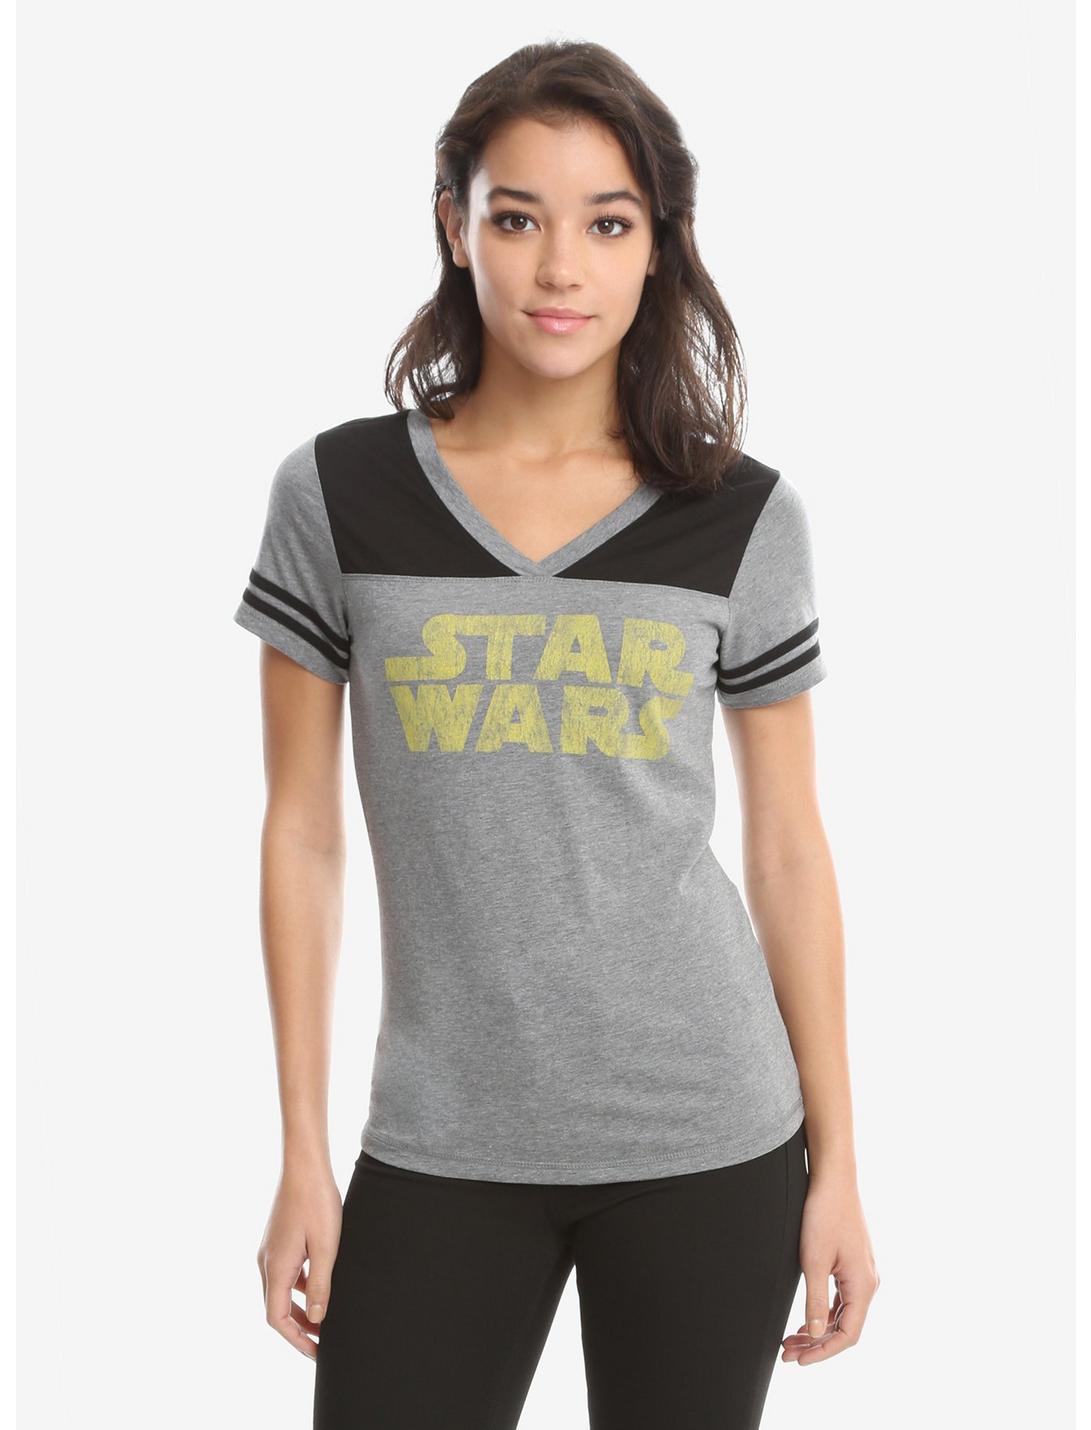 Star Wars 77 Logo Athletic T-Shirt, HEATHER GREY, hi-res